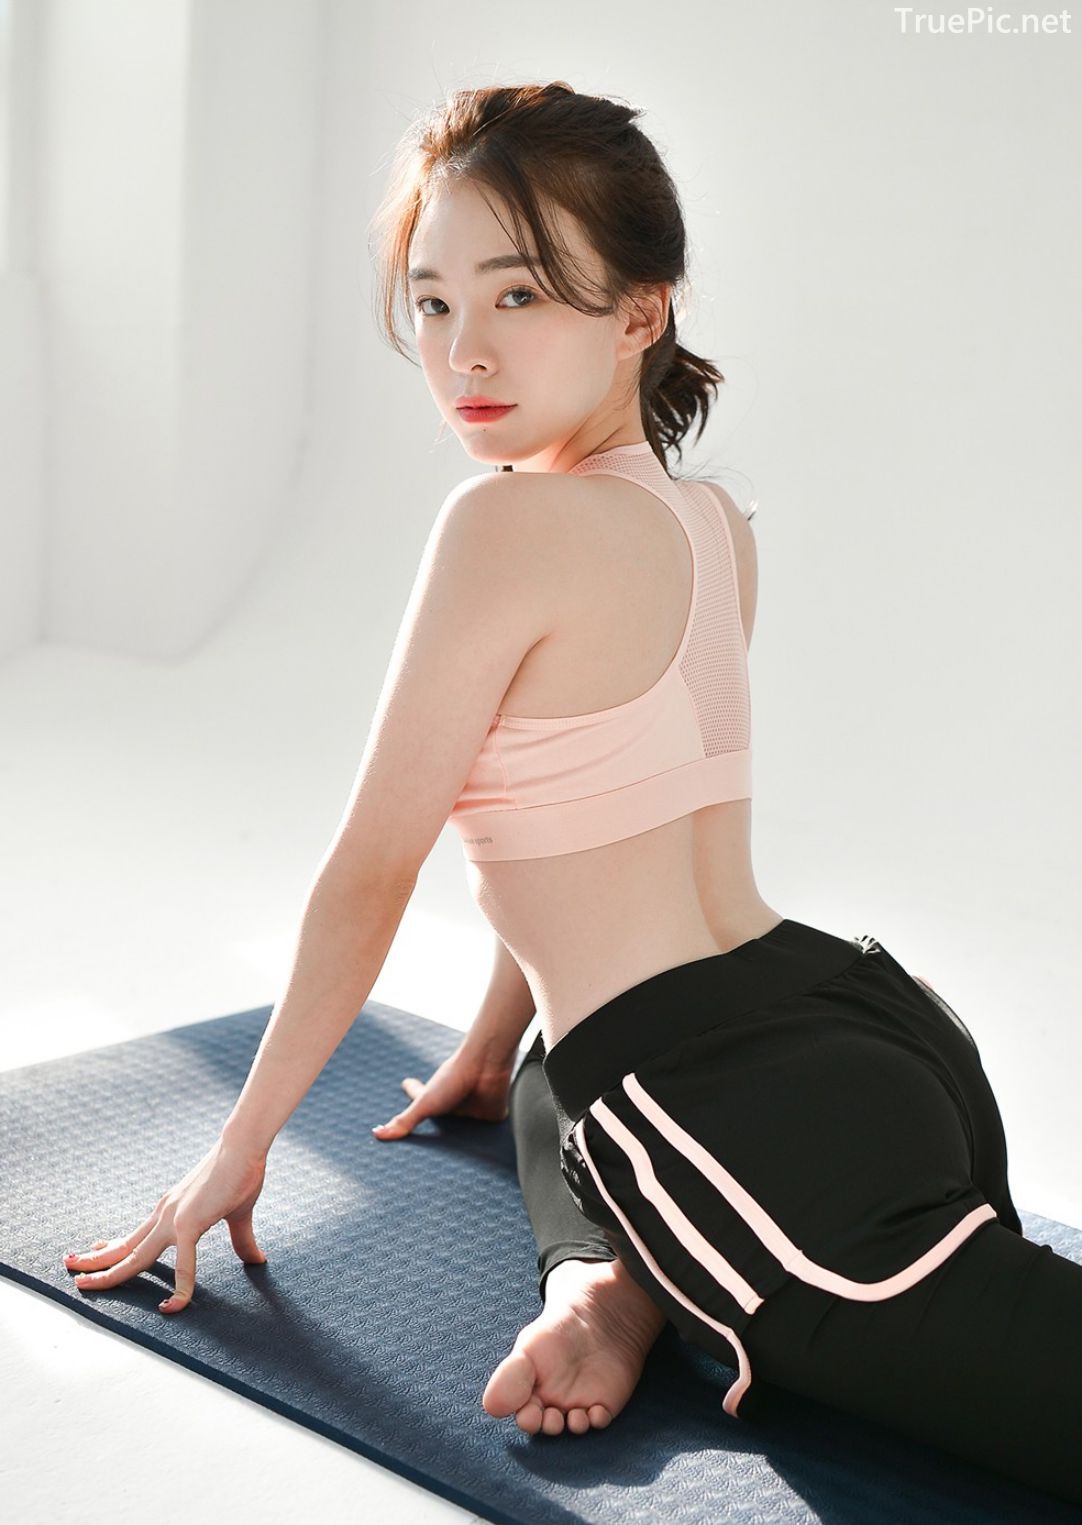 Korean Lingerie Queen - Haneul - Fitness Set Collection - TruePic.net - Picture 29